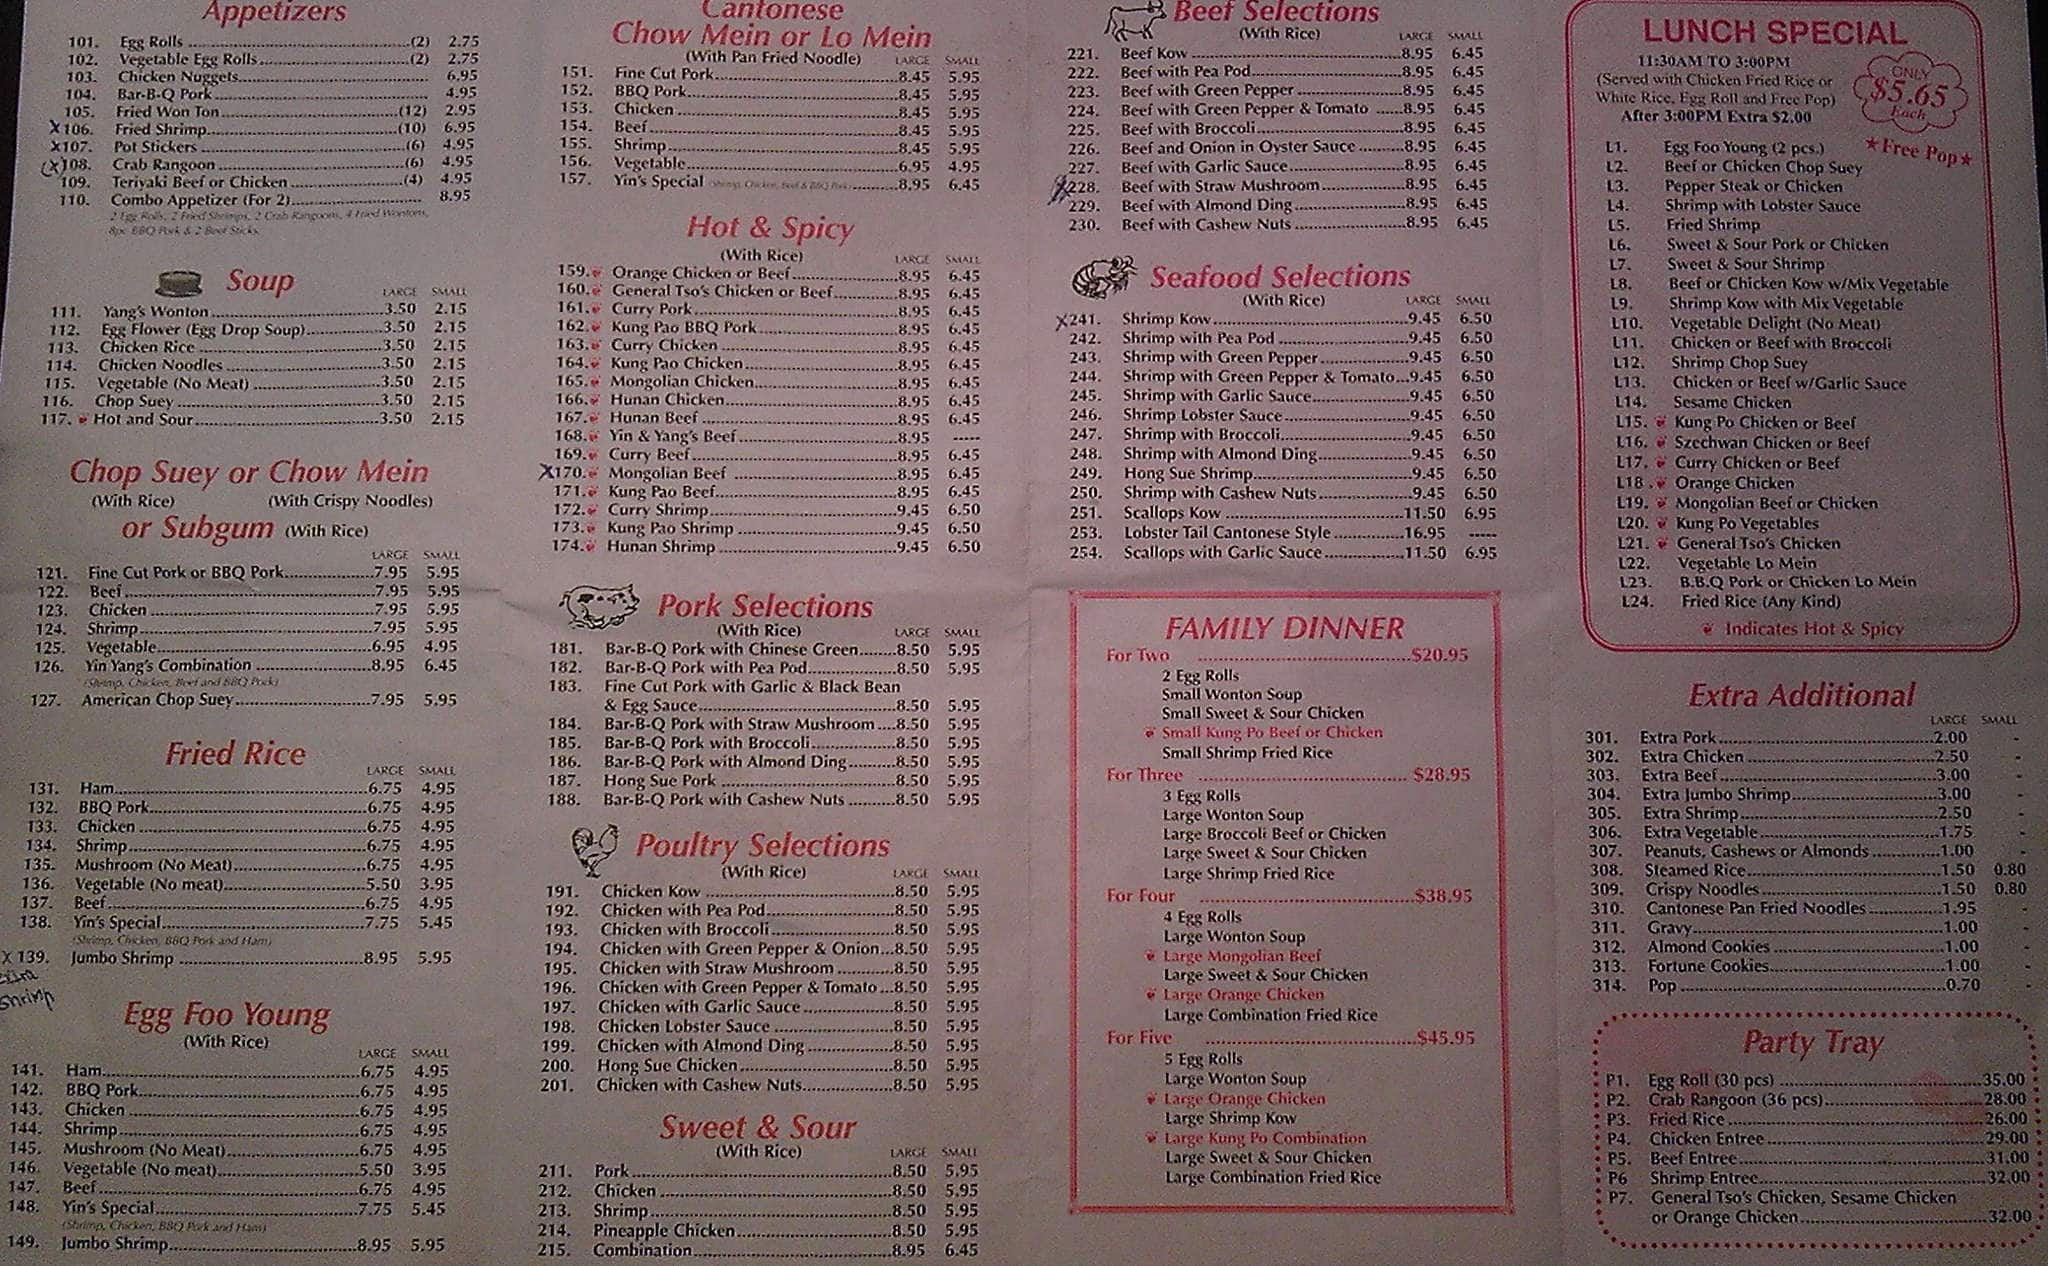 Yin & Yang's Carry Out Restaurant menu